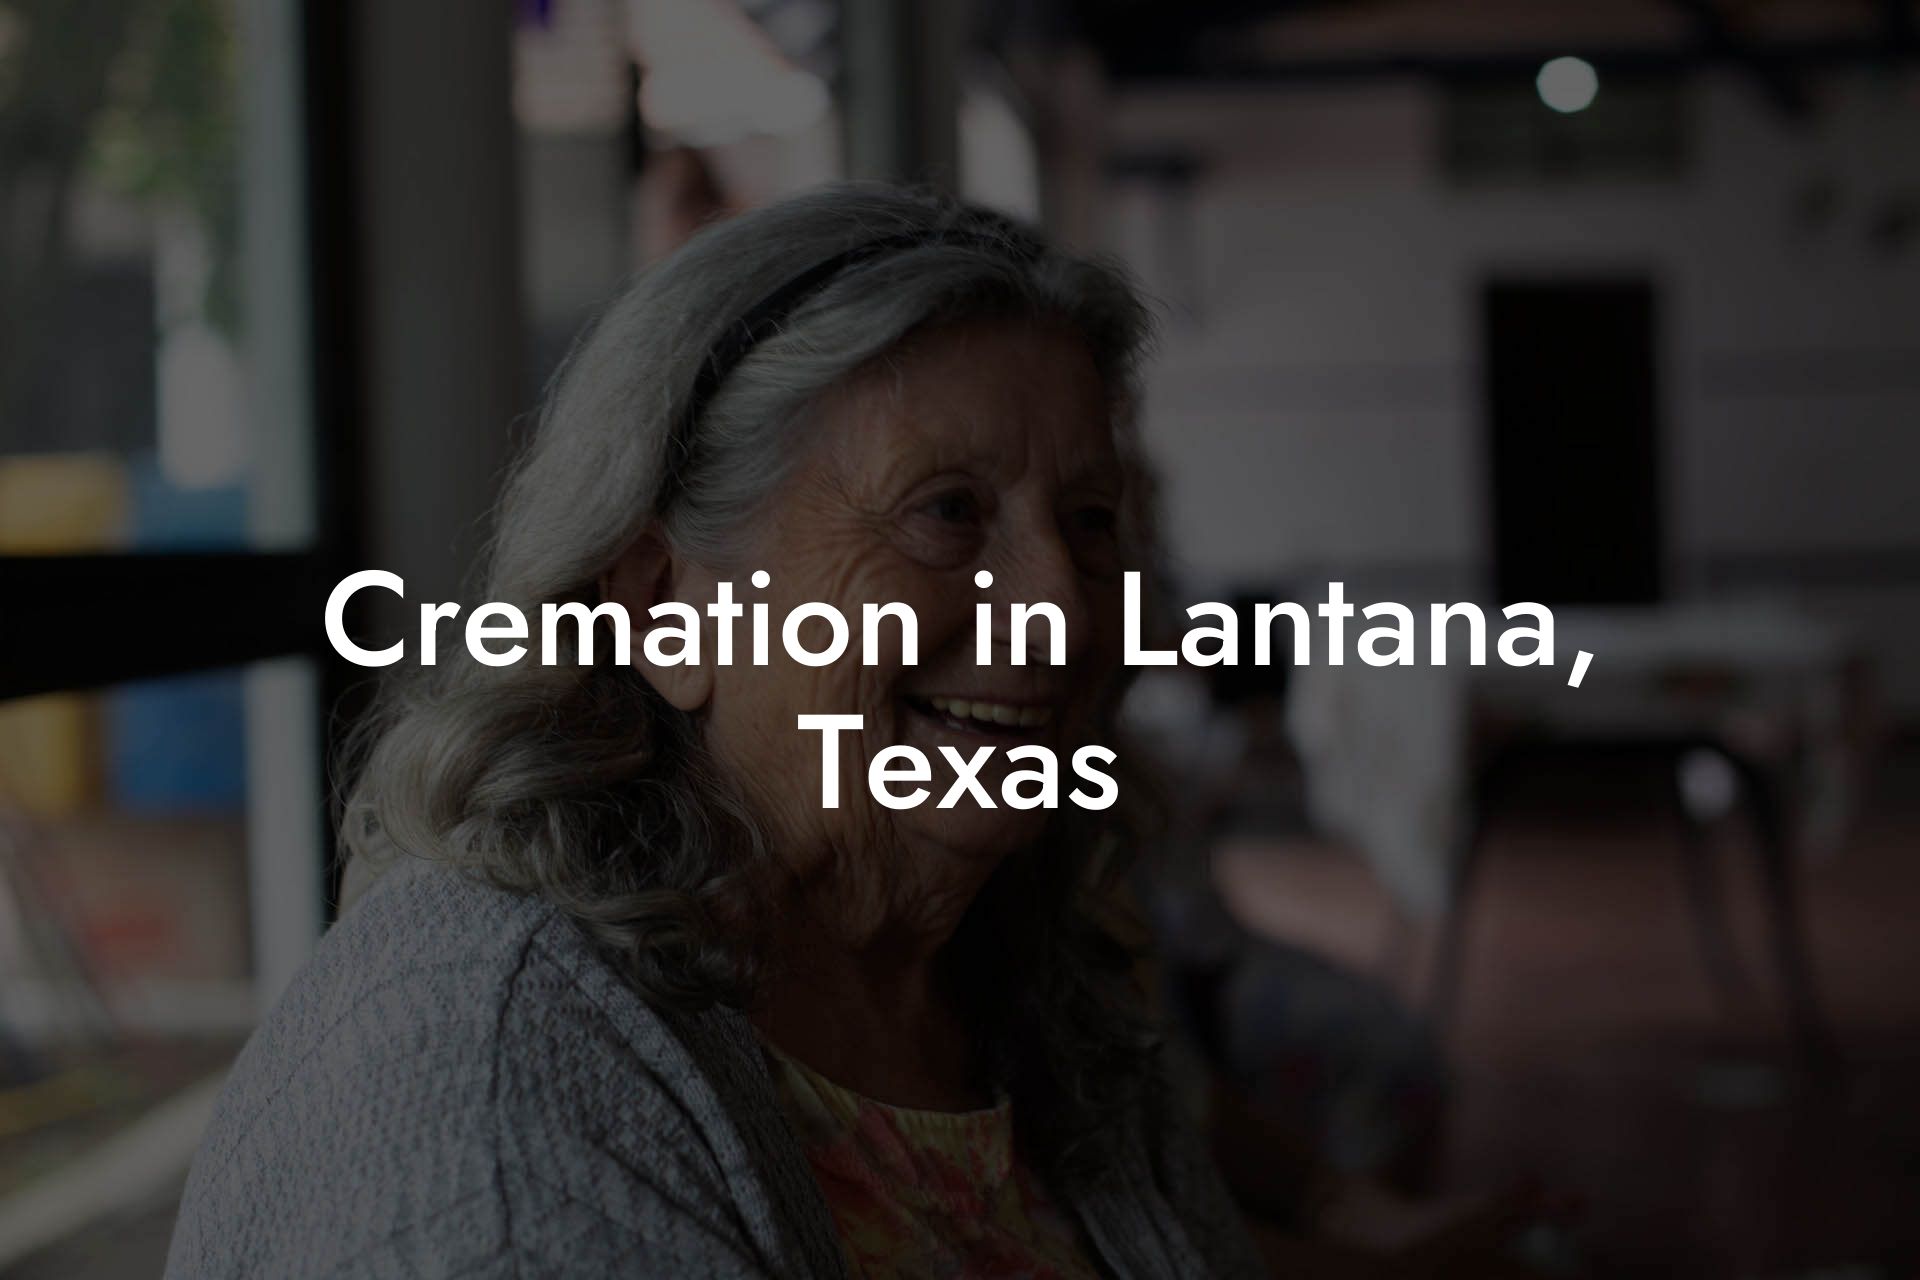 Cremation in Lantana, Texas